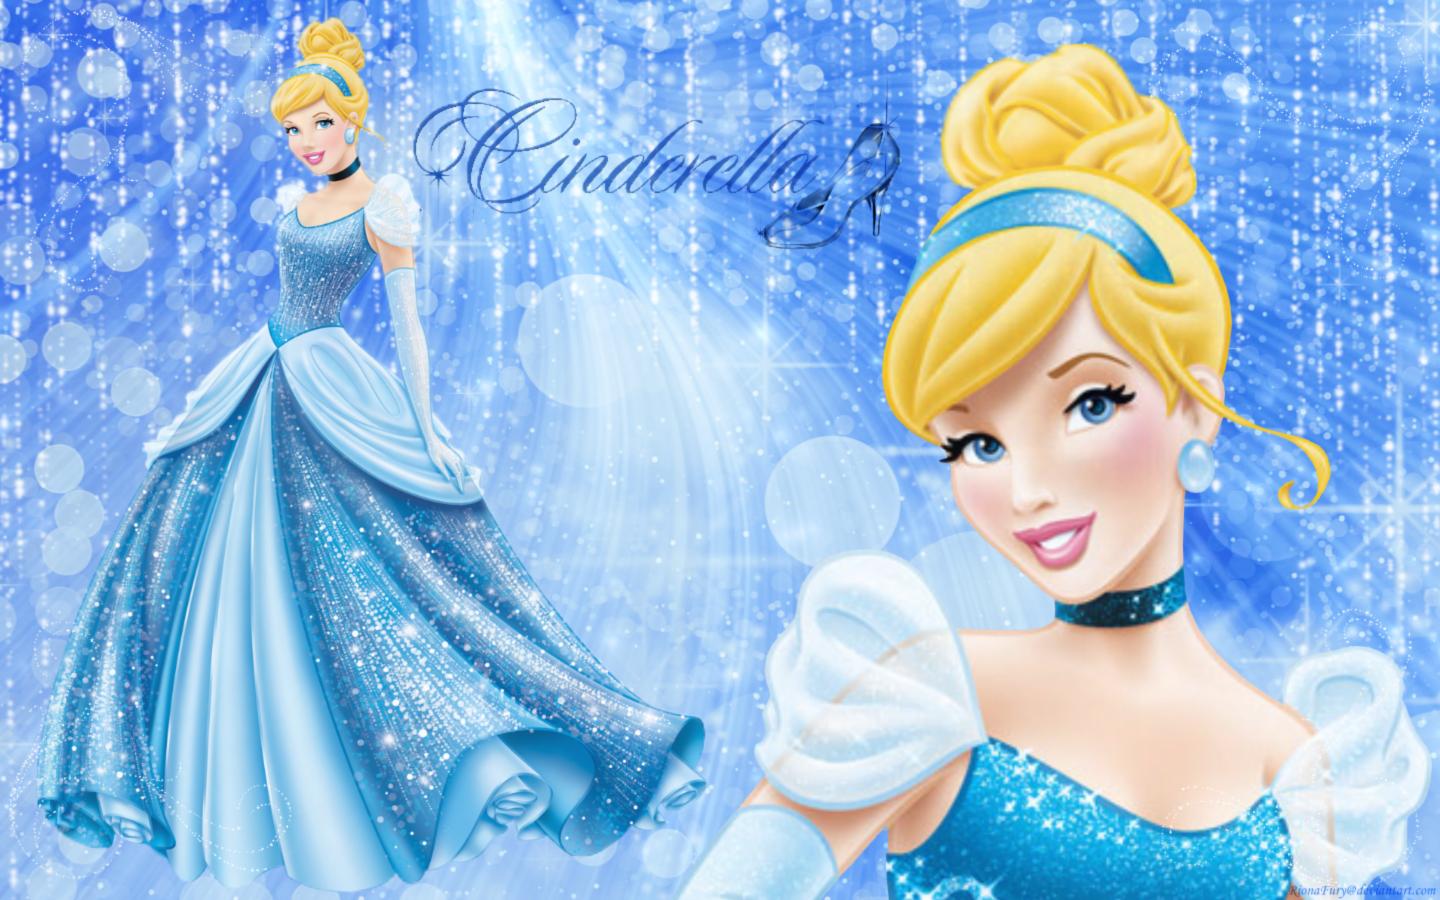 Disney Princess Sleeping Beauty Wallpaper - Cinderella Wallpaper Disney Princess - HD Wallpaper 